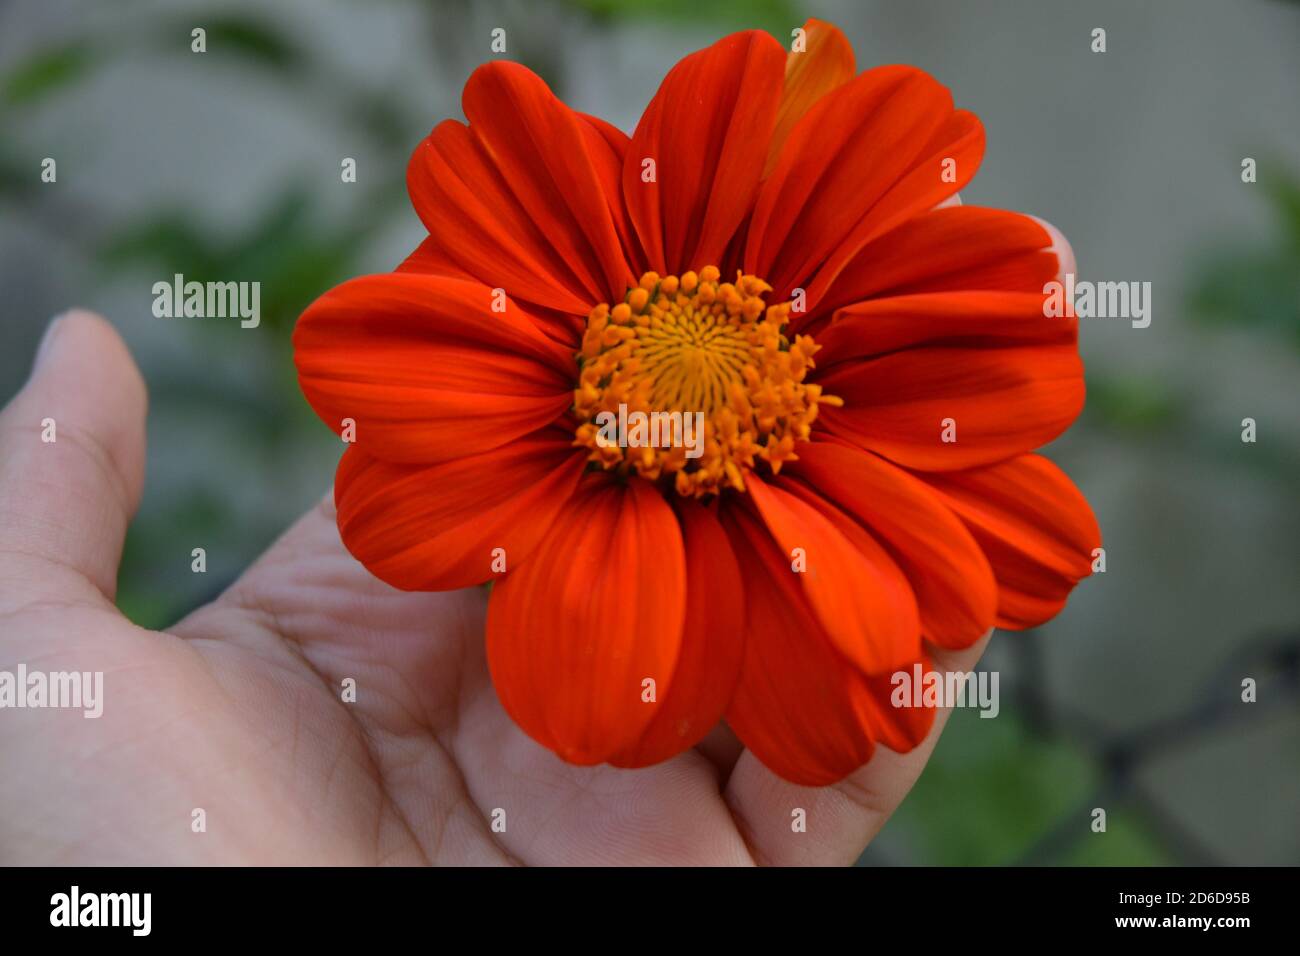 Red sunflower image. Stock Photo